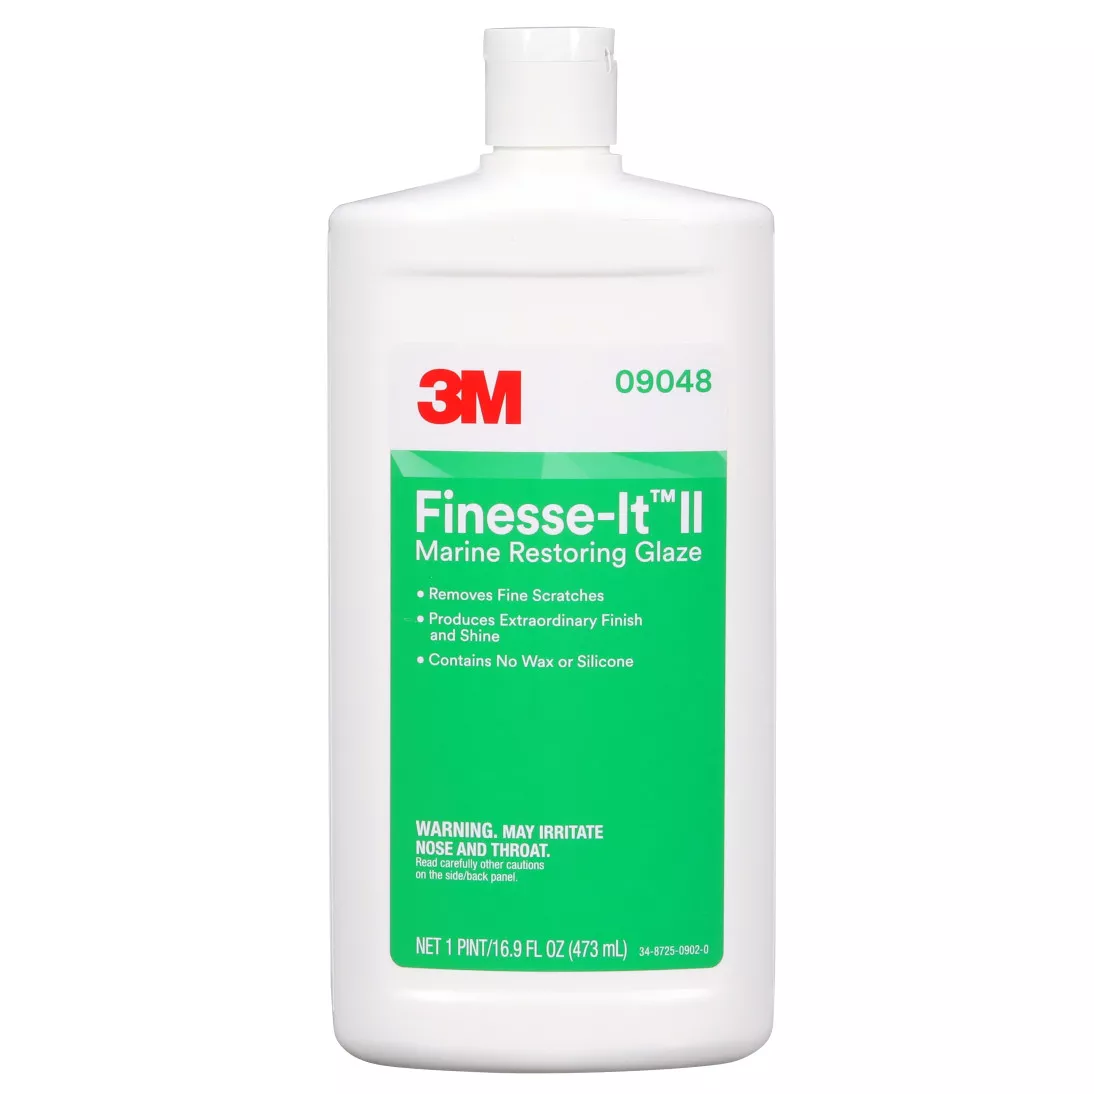 3M™ Marine Finesse-It™ II Glaze, 09048, 1 Pint (16 fl oz/473 mL), 6
bottles per case